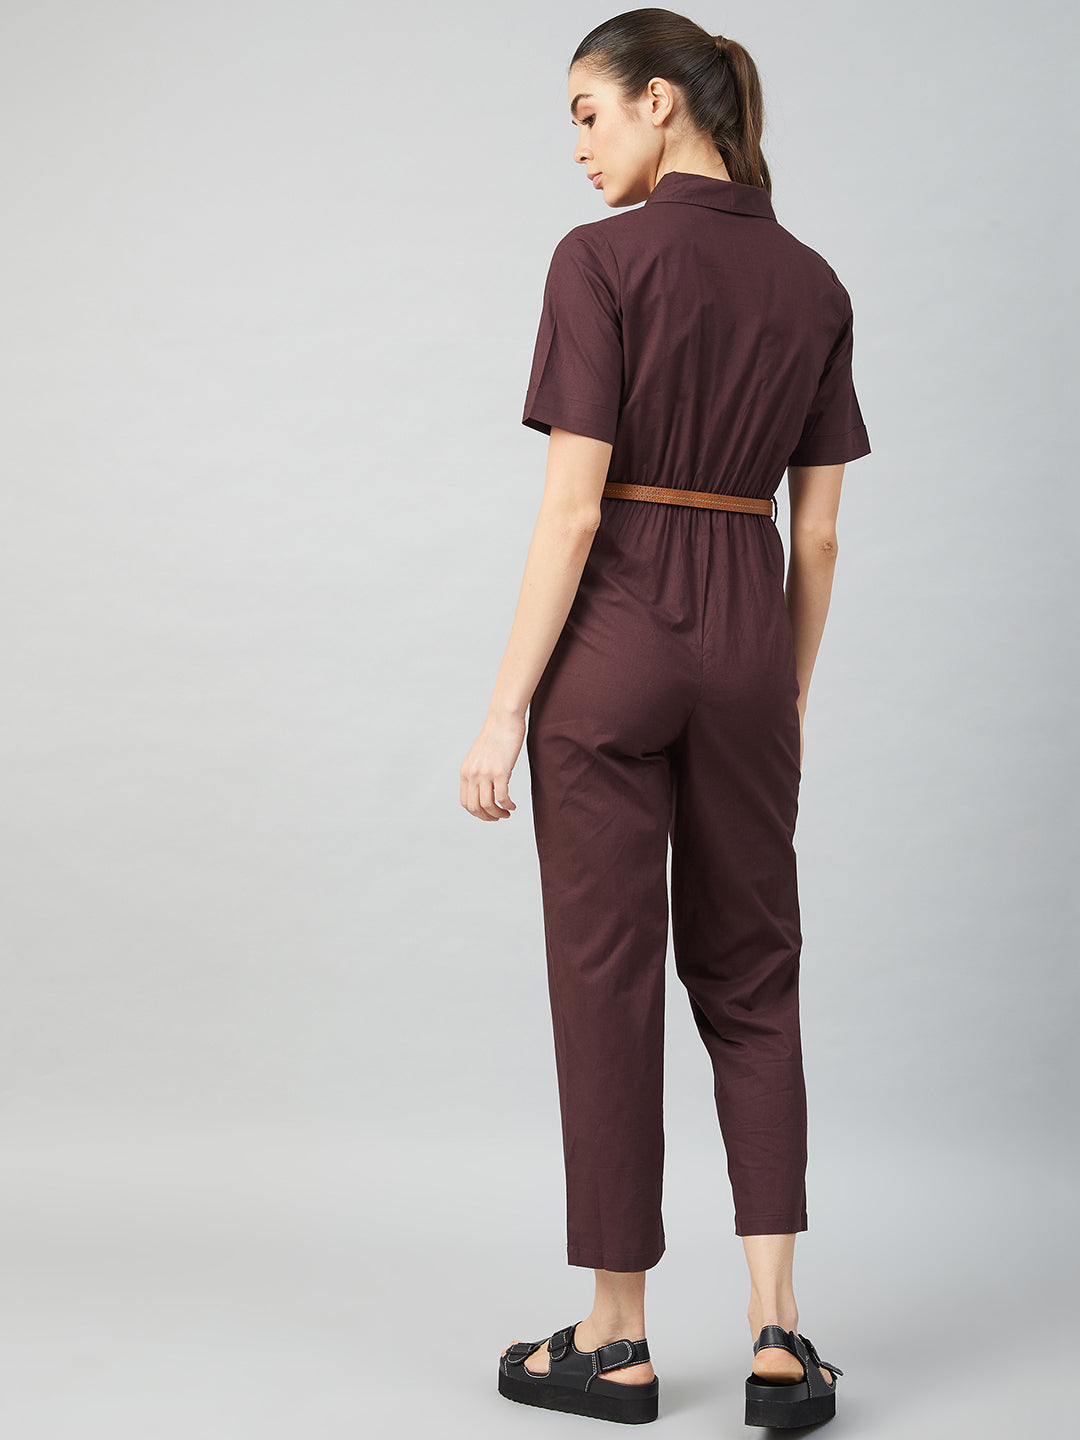 Athena Women Brown Solid Cotton Jumpsuit - Athena Lifestyle